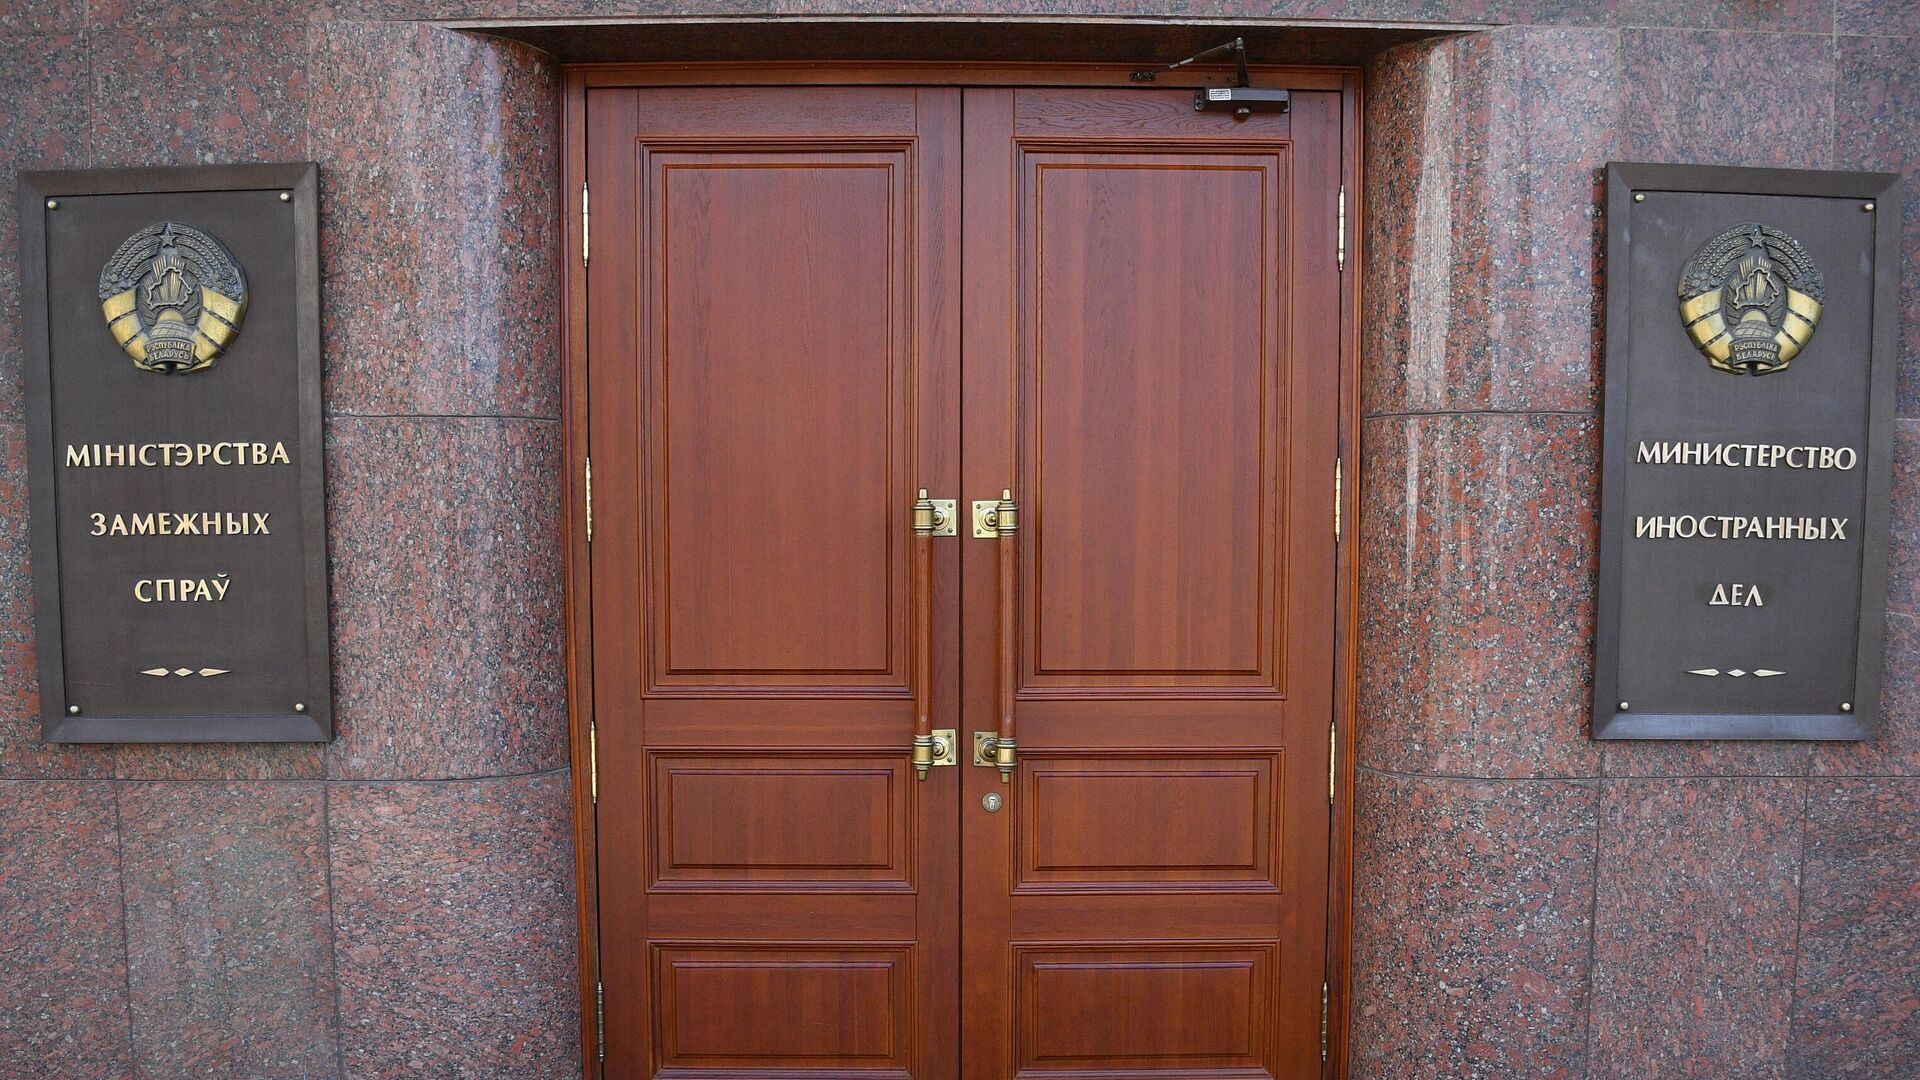 Вход в здание МИД Белоруссии в Минске - РИА Новости, 1920, 24.09.2020